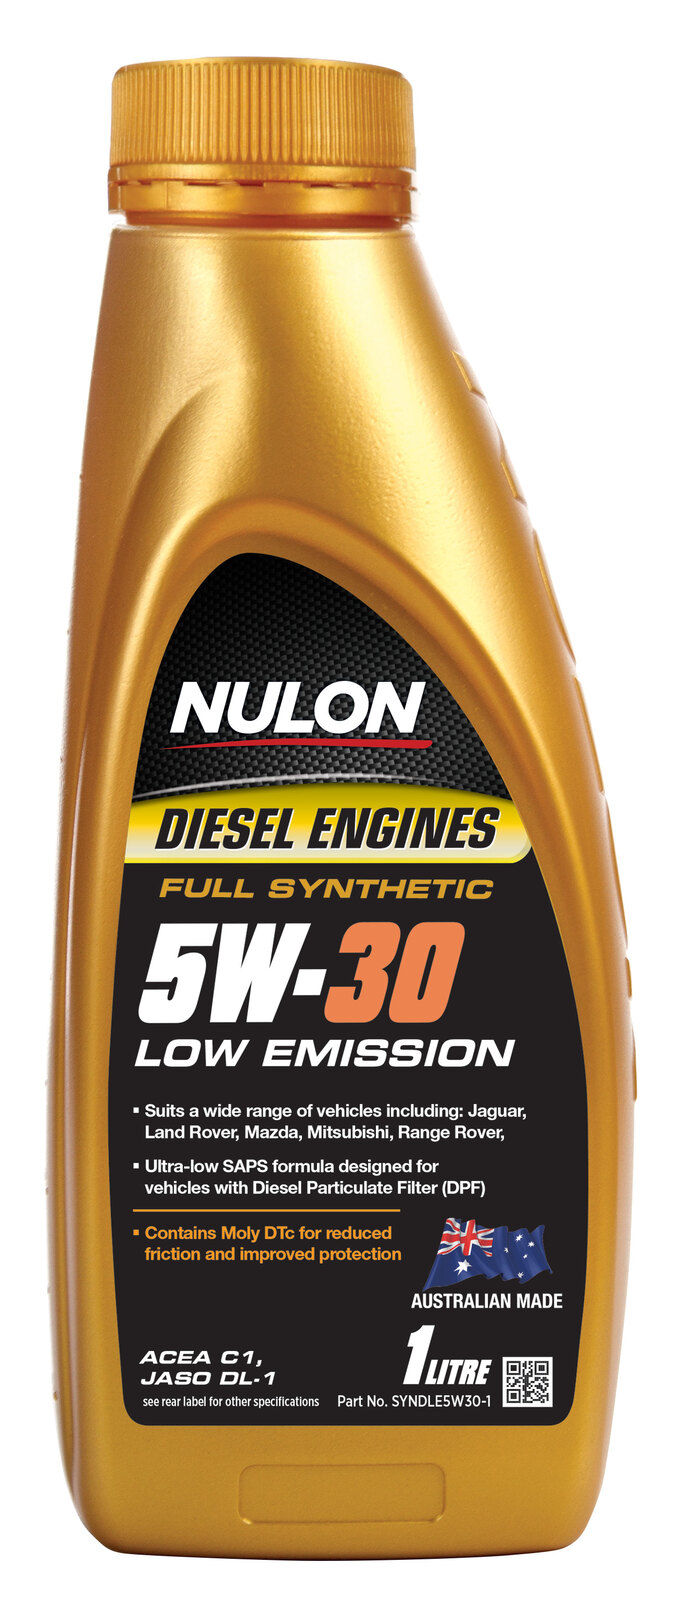 NULON Full Synthetic 5W-30 Low Emission Diesel, Each